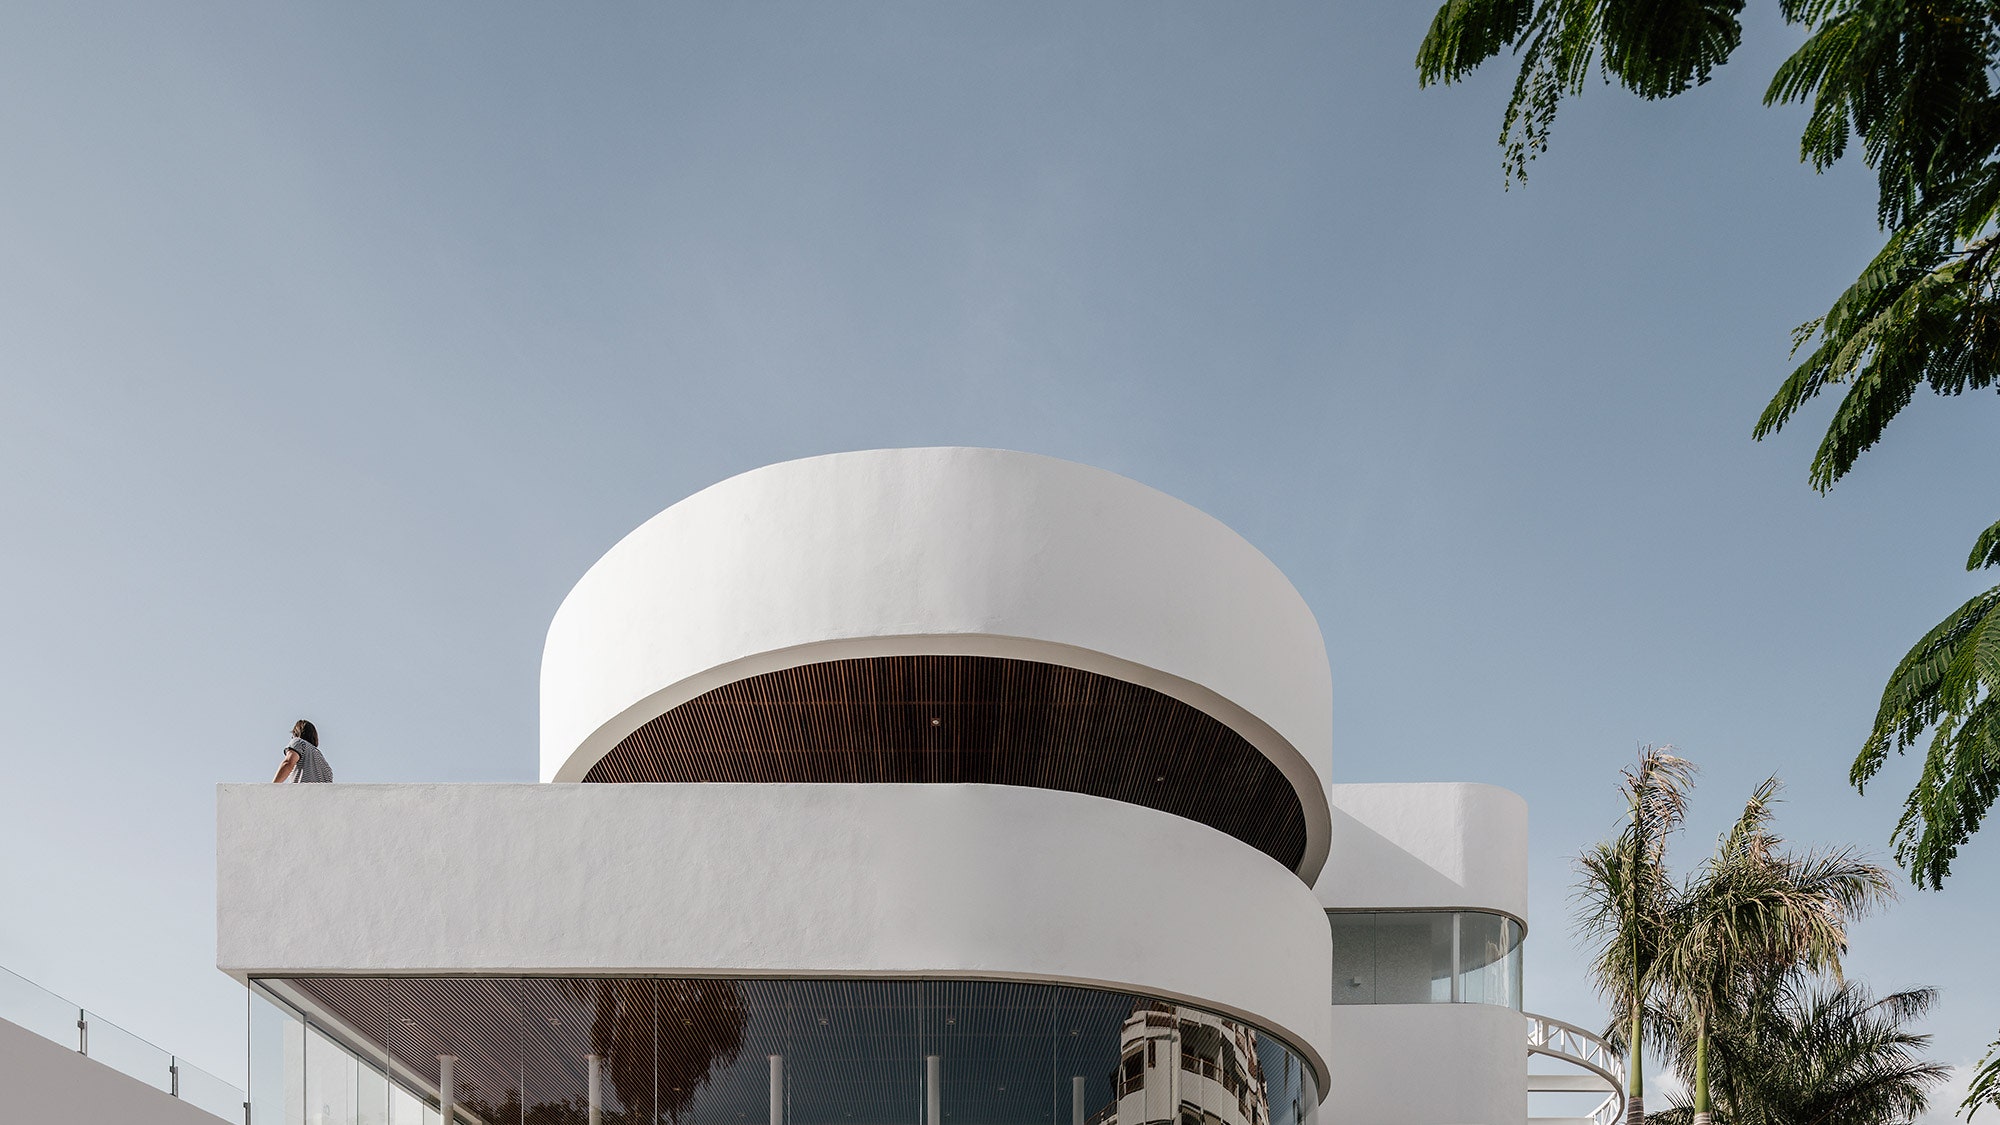 Архитектура и интерьеры отеля Flamingo Club на Тенерифе